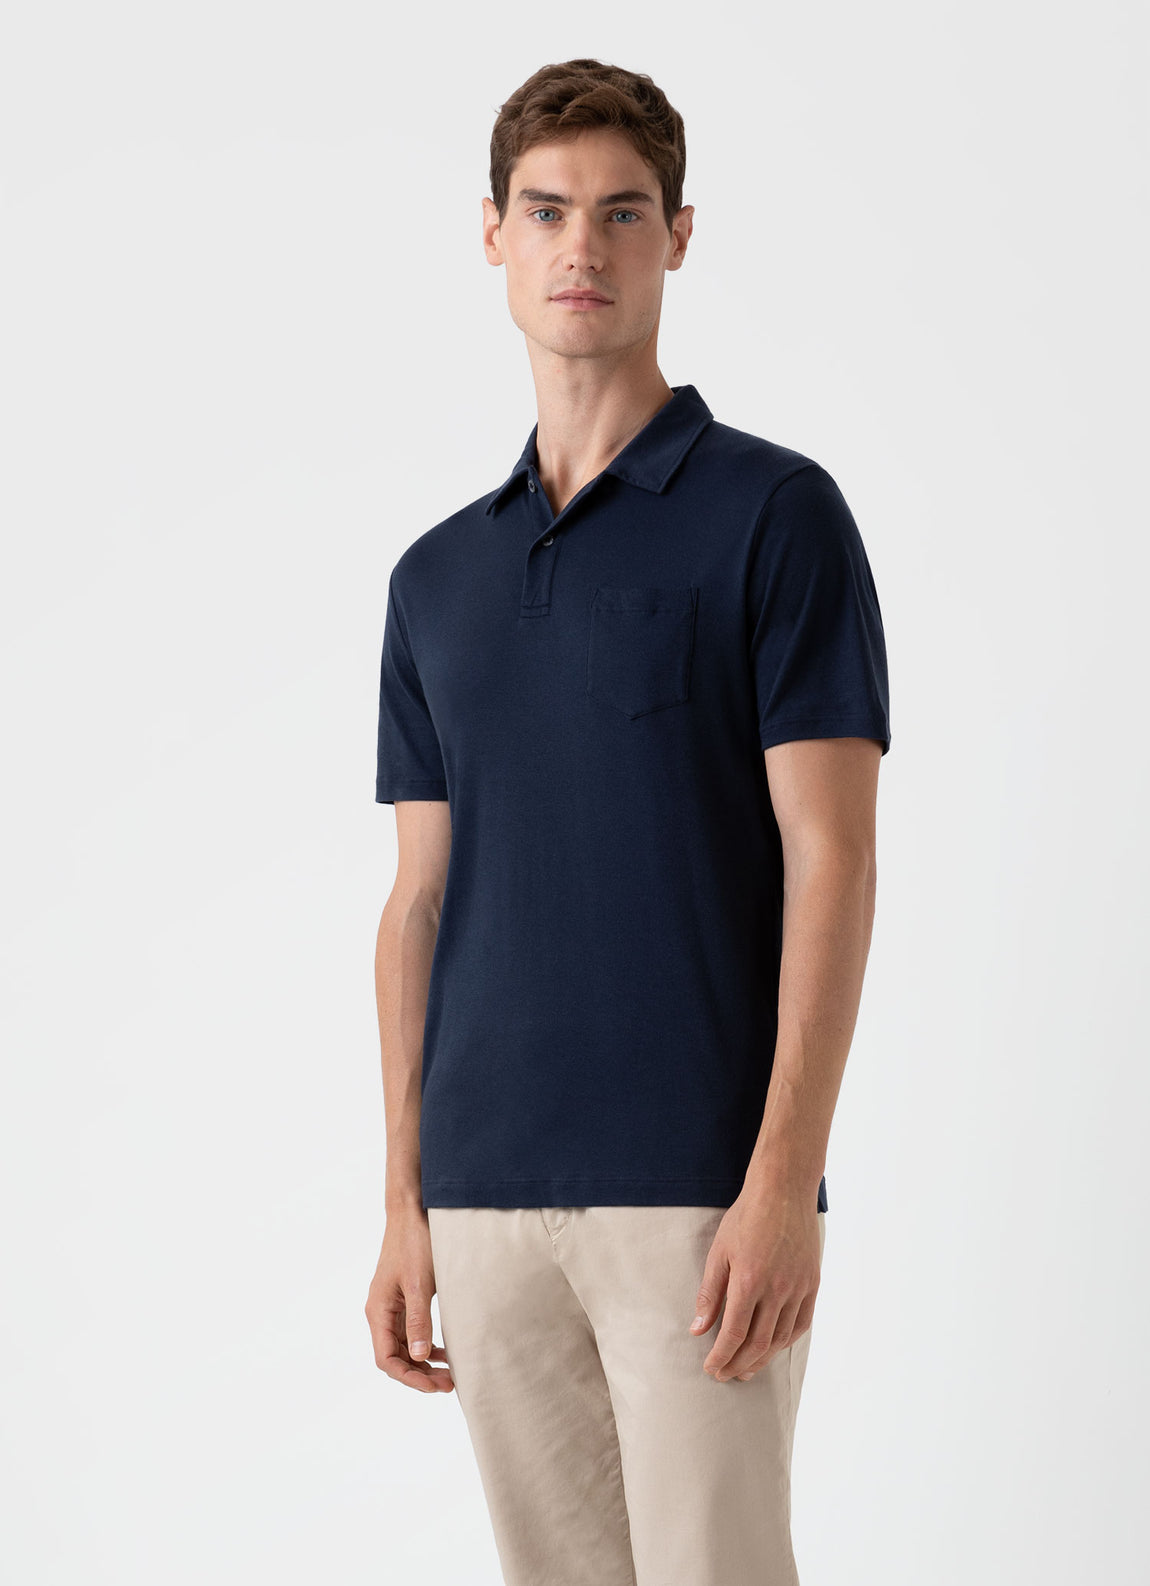 Men's Sea Island Cotton Riviera Polo Shirt in Navy